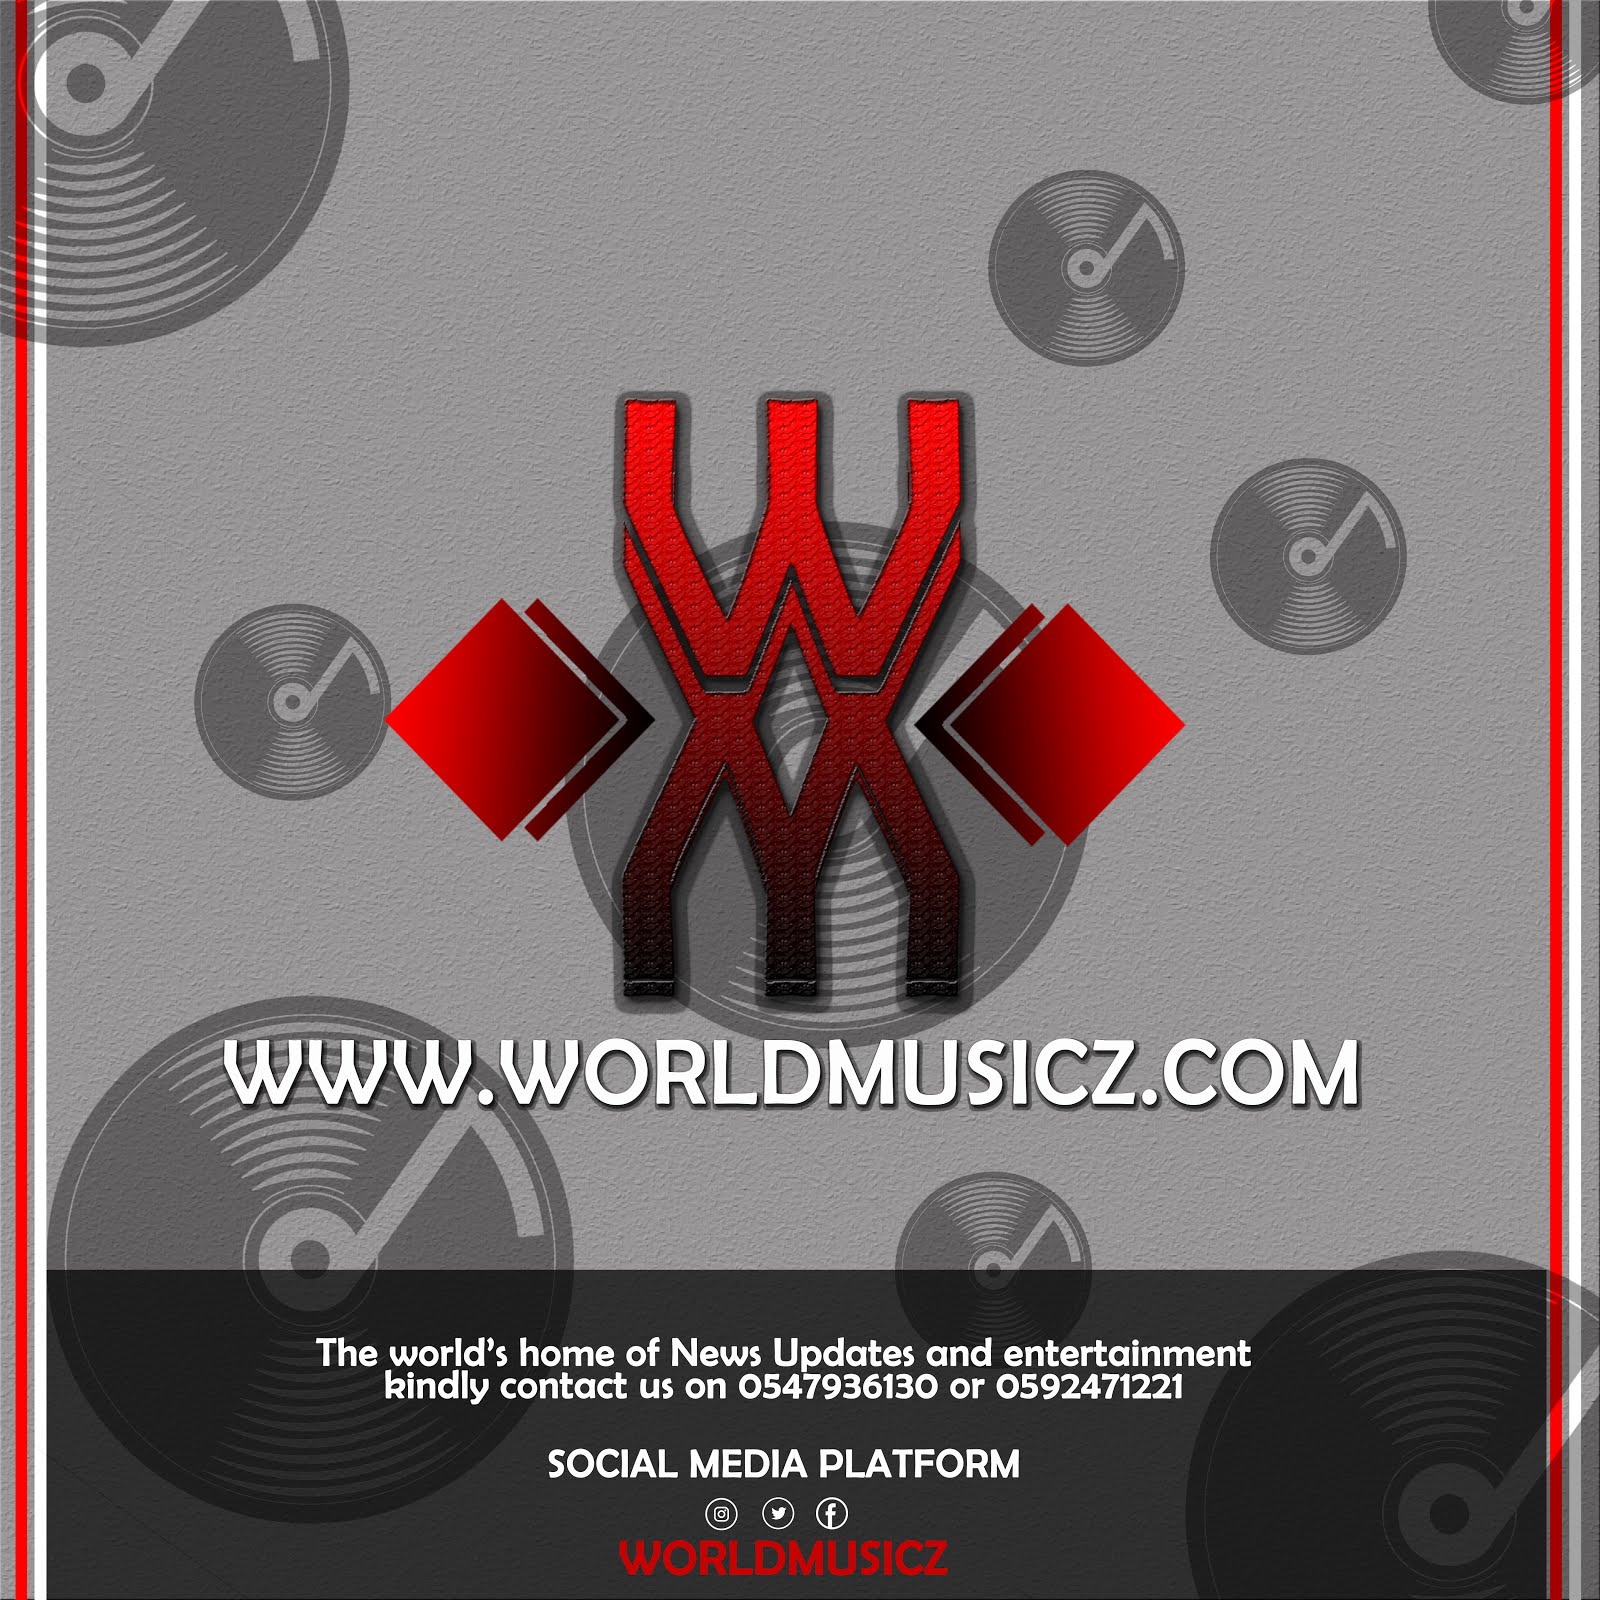 Worldmusicz.com